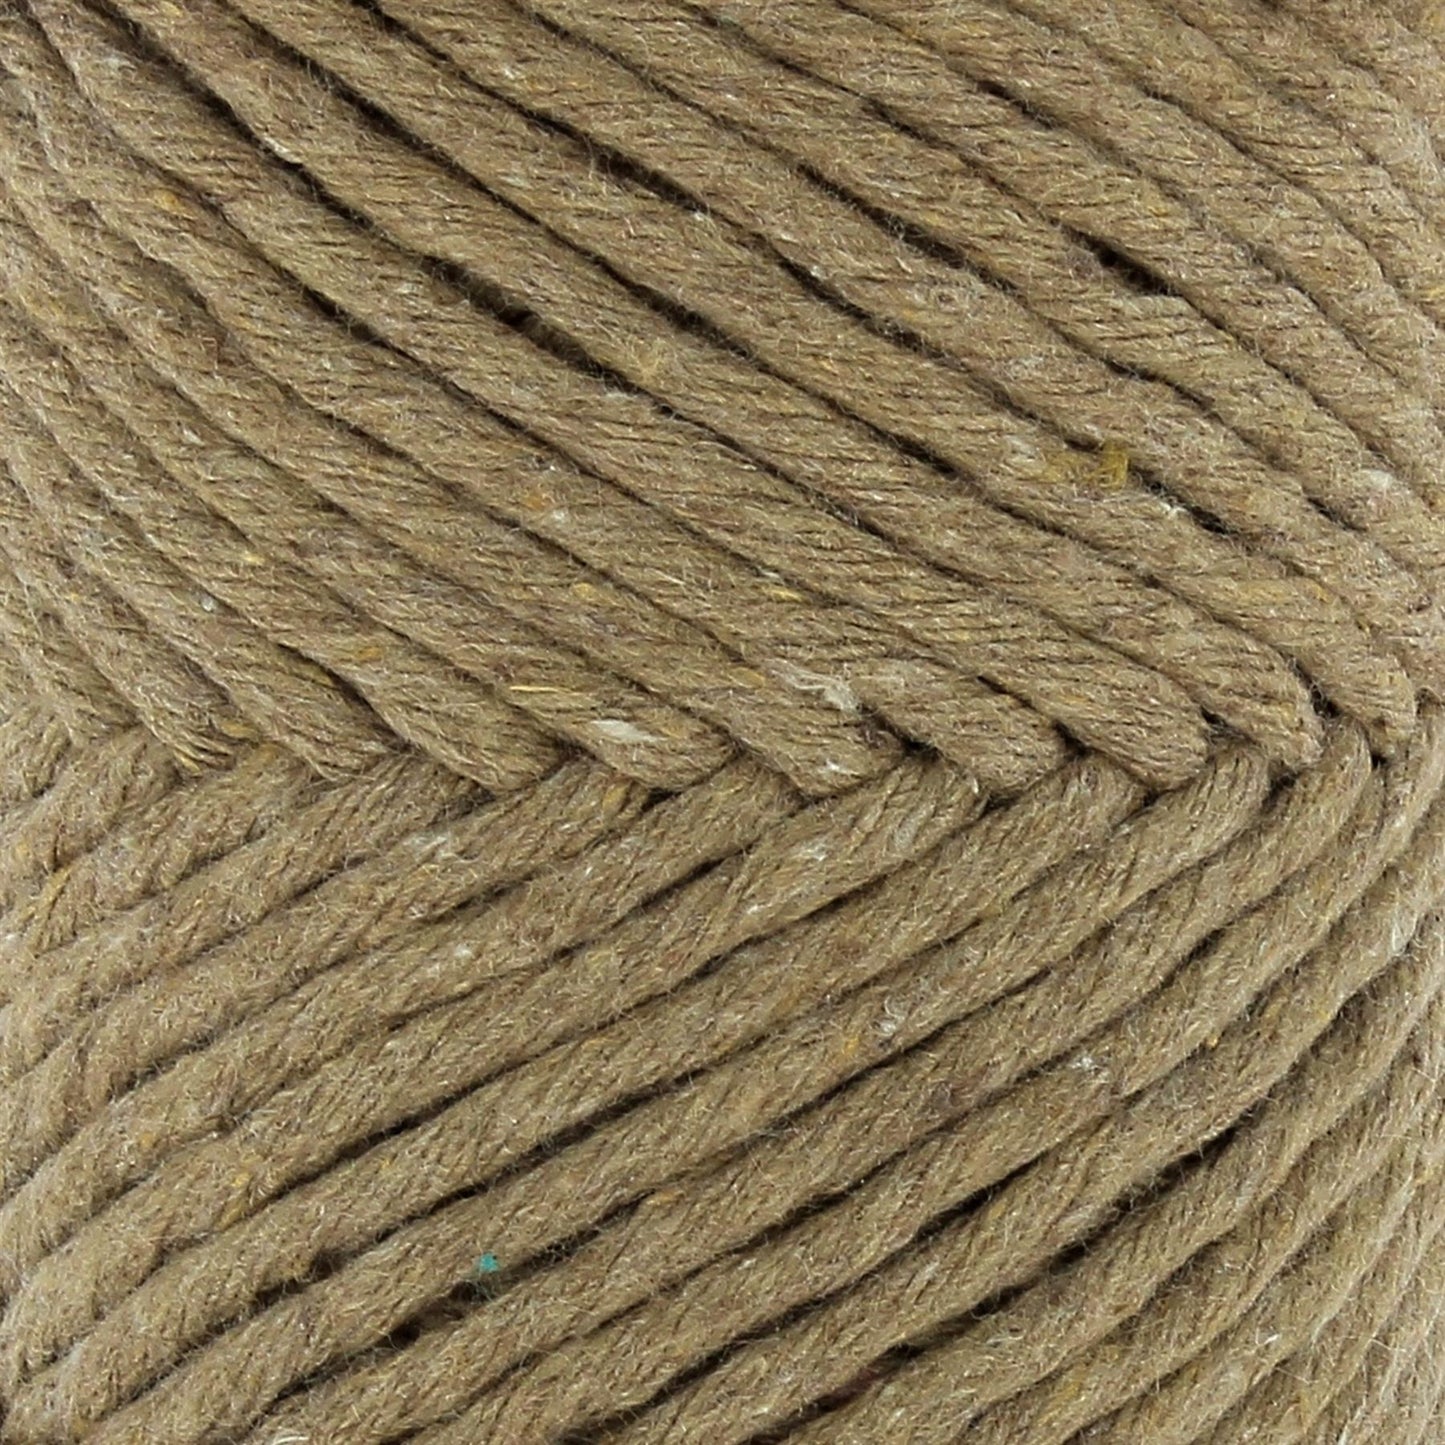 [Hoooked] S1110200 Spesso Chunky Teak Cotton Yarn - 50M, 200g